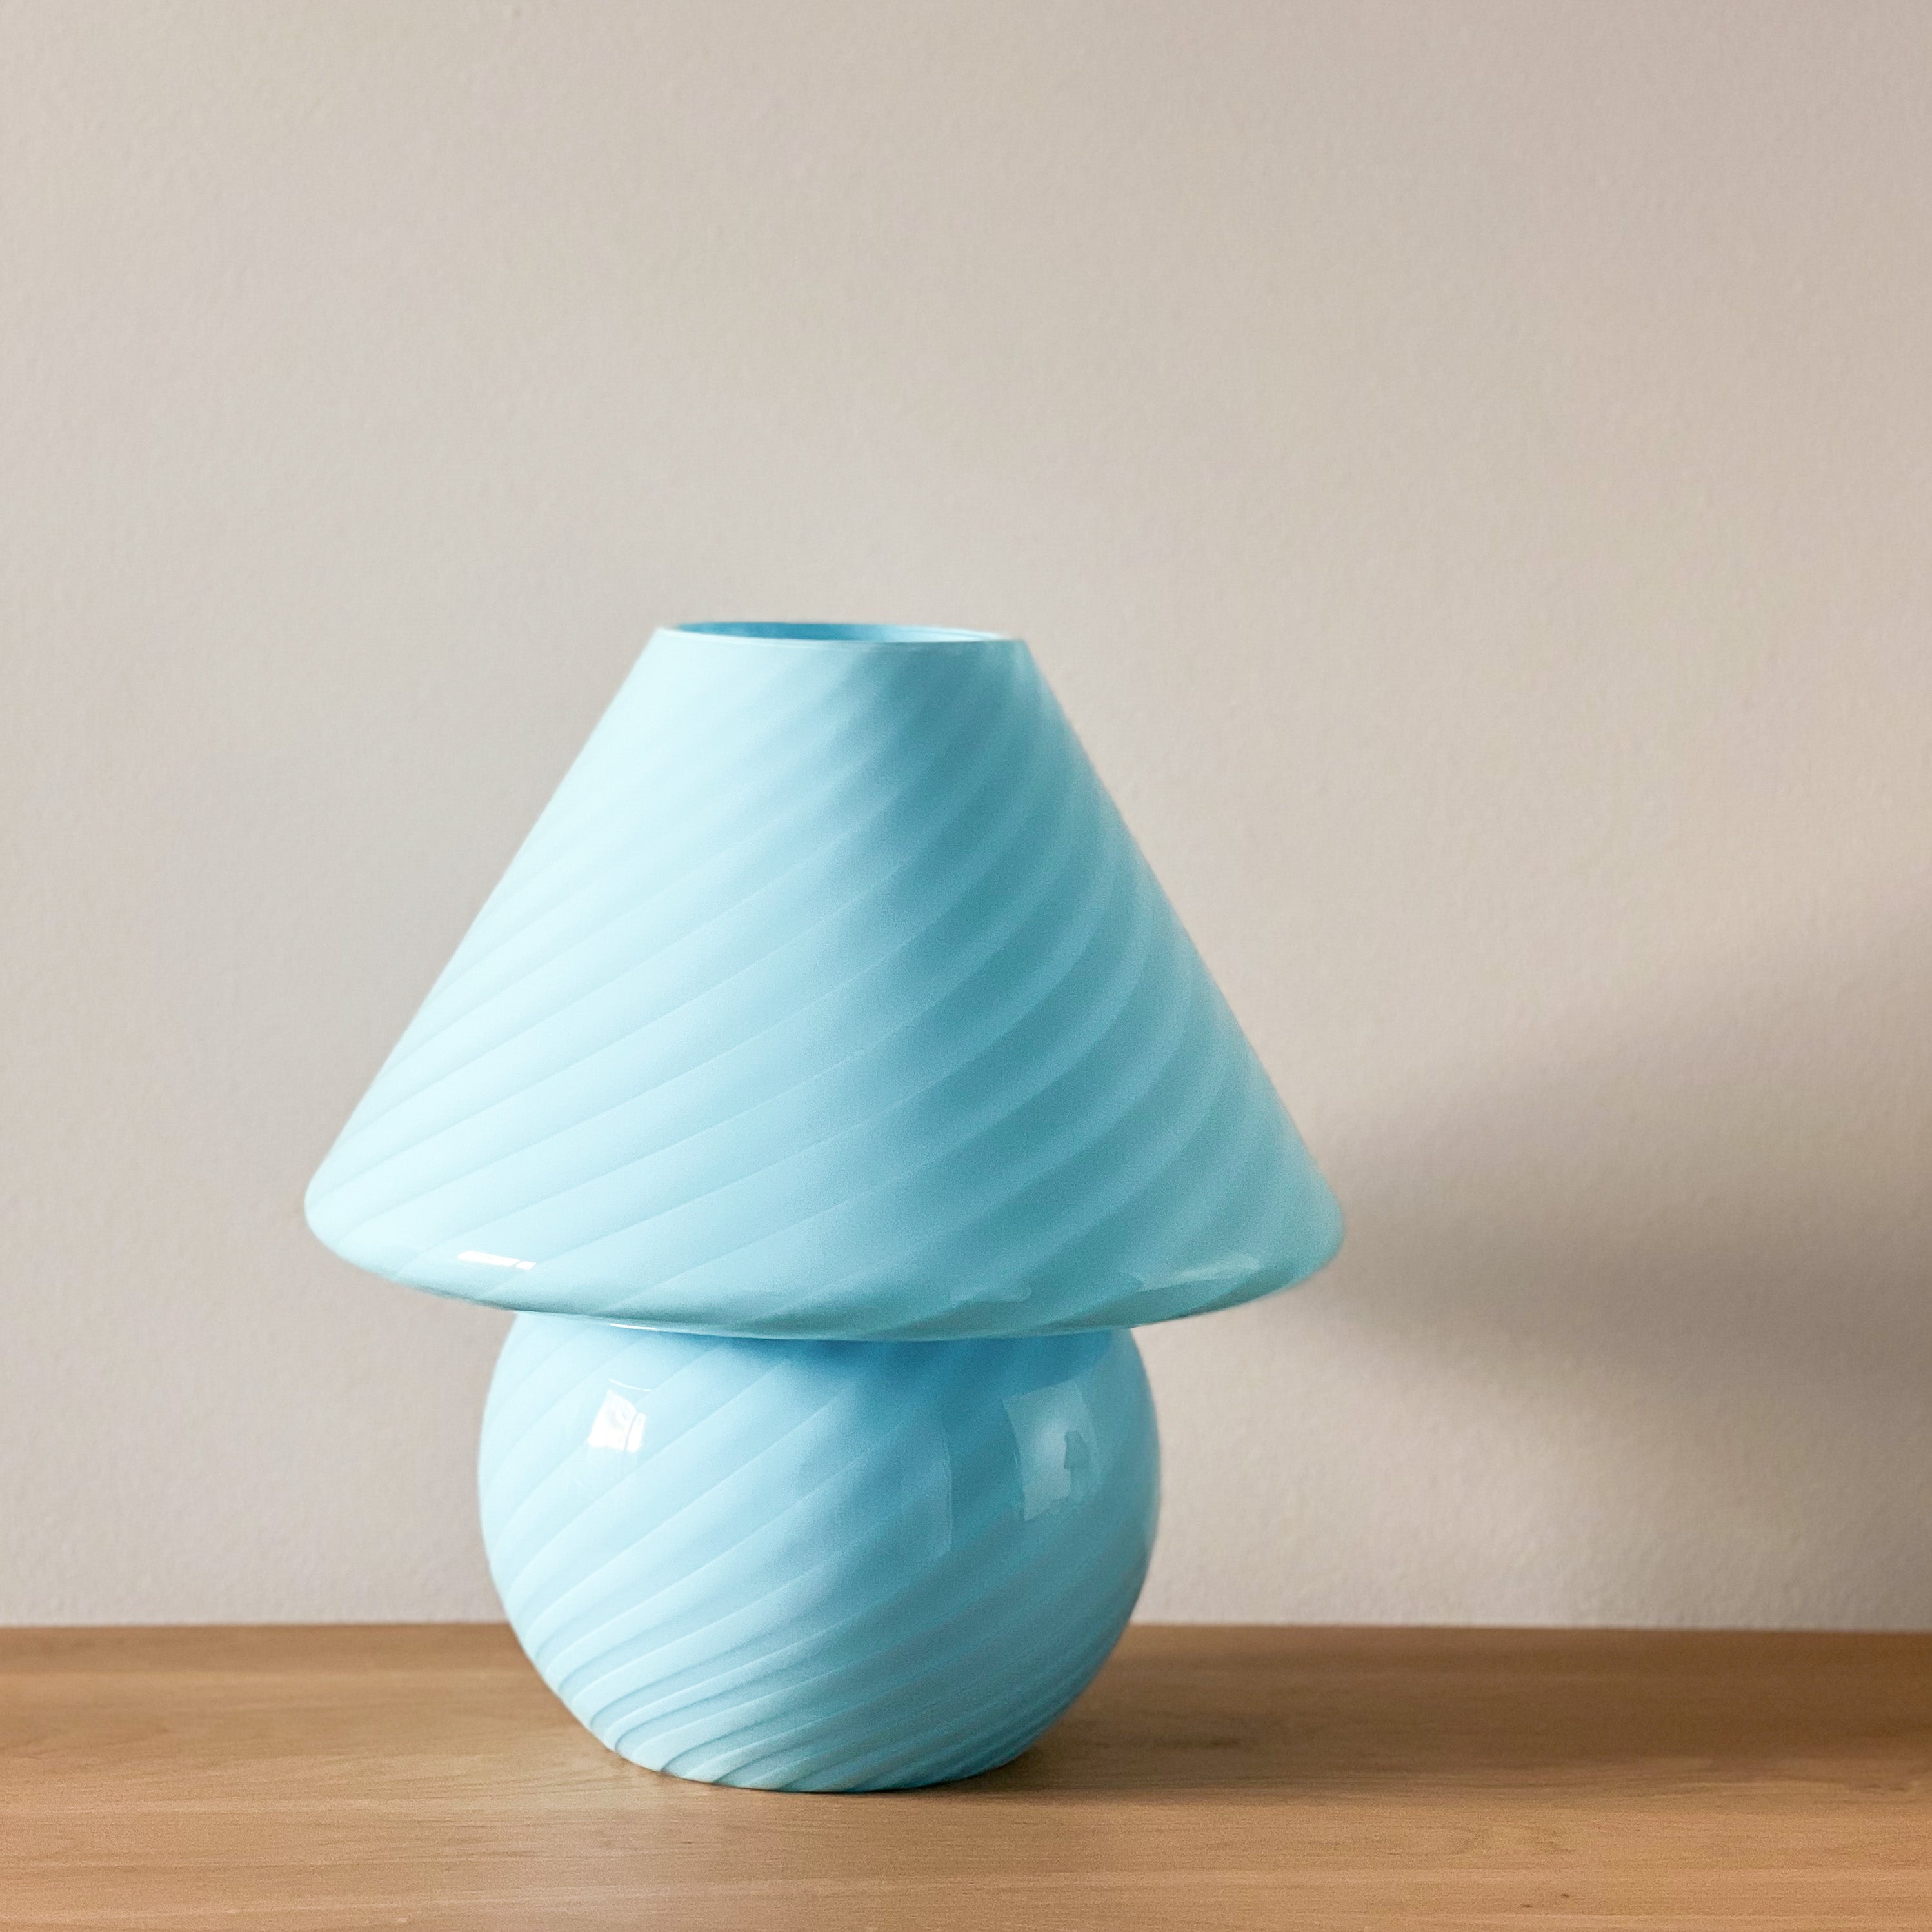 XL Blue Mushroom Lamp